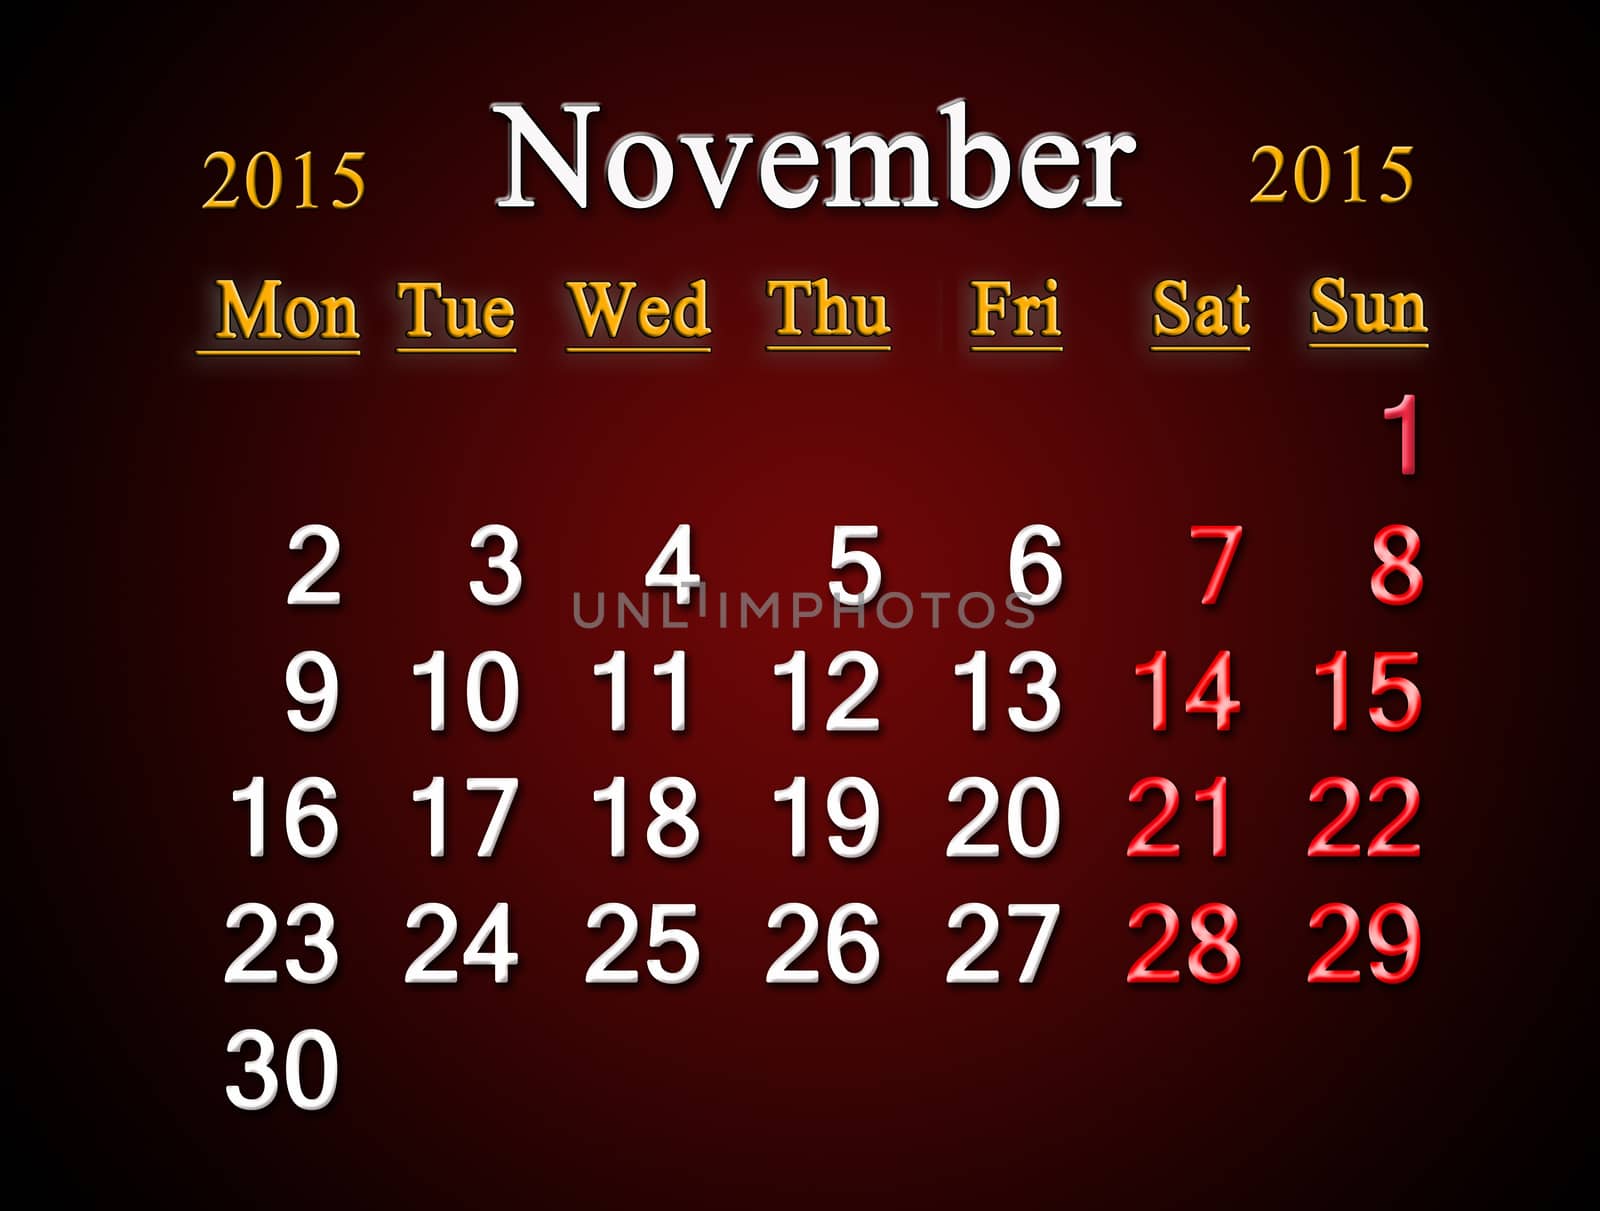 calendar on November of 2015 year on claret by alexmak